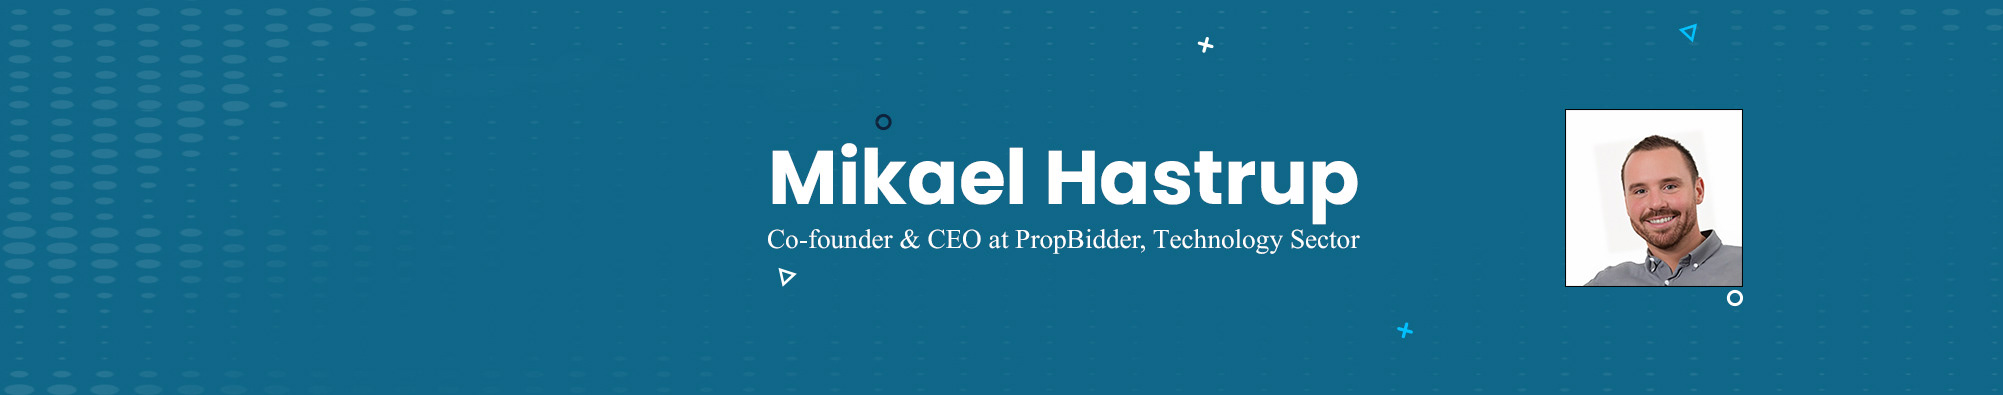 Mikael Hastrup's profile banner